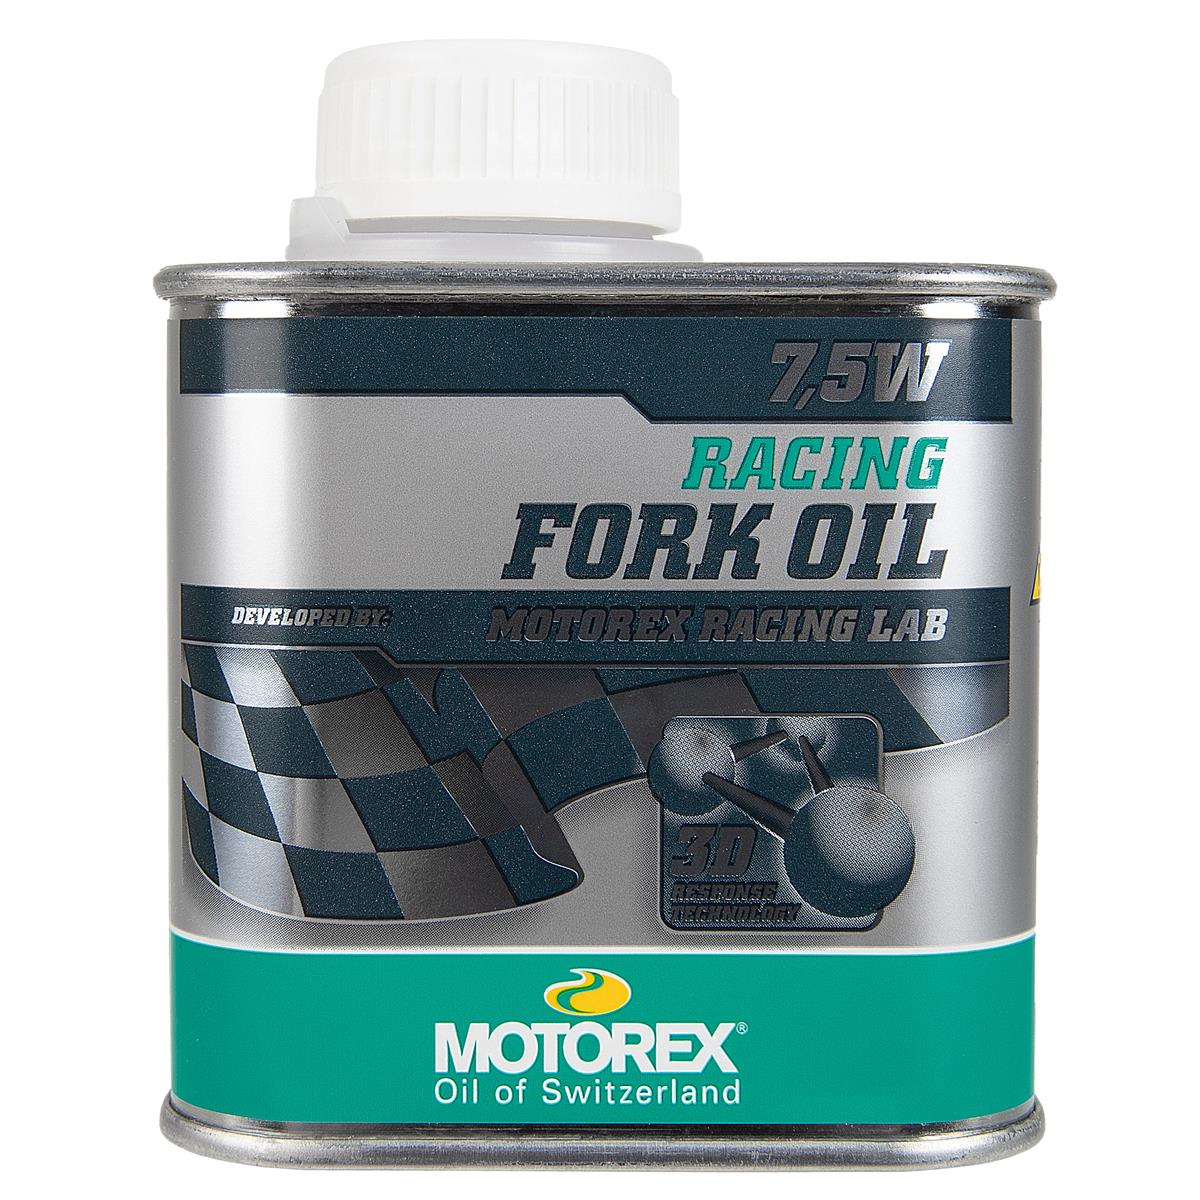 Motorex Fork Oil Racing 7.5 W, 250 ml